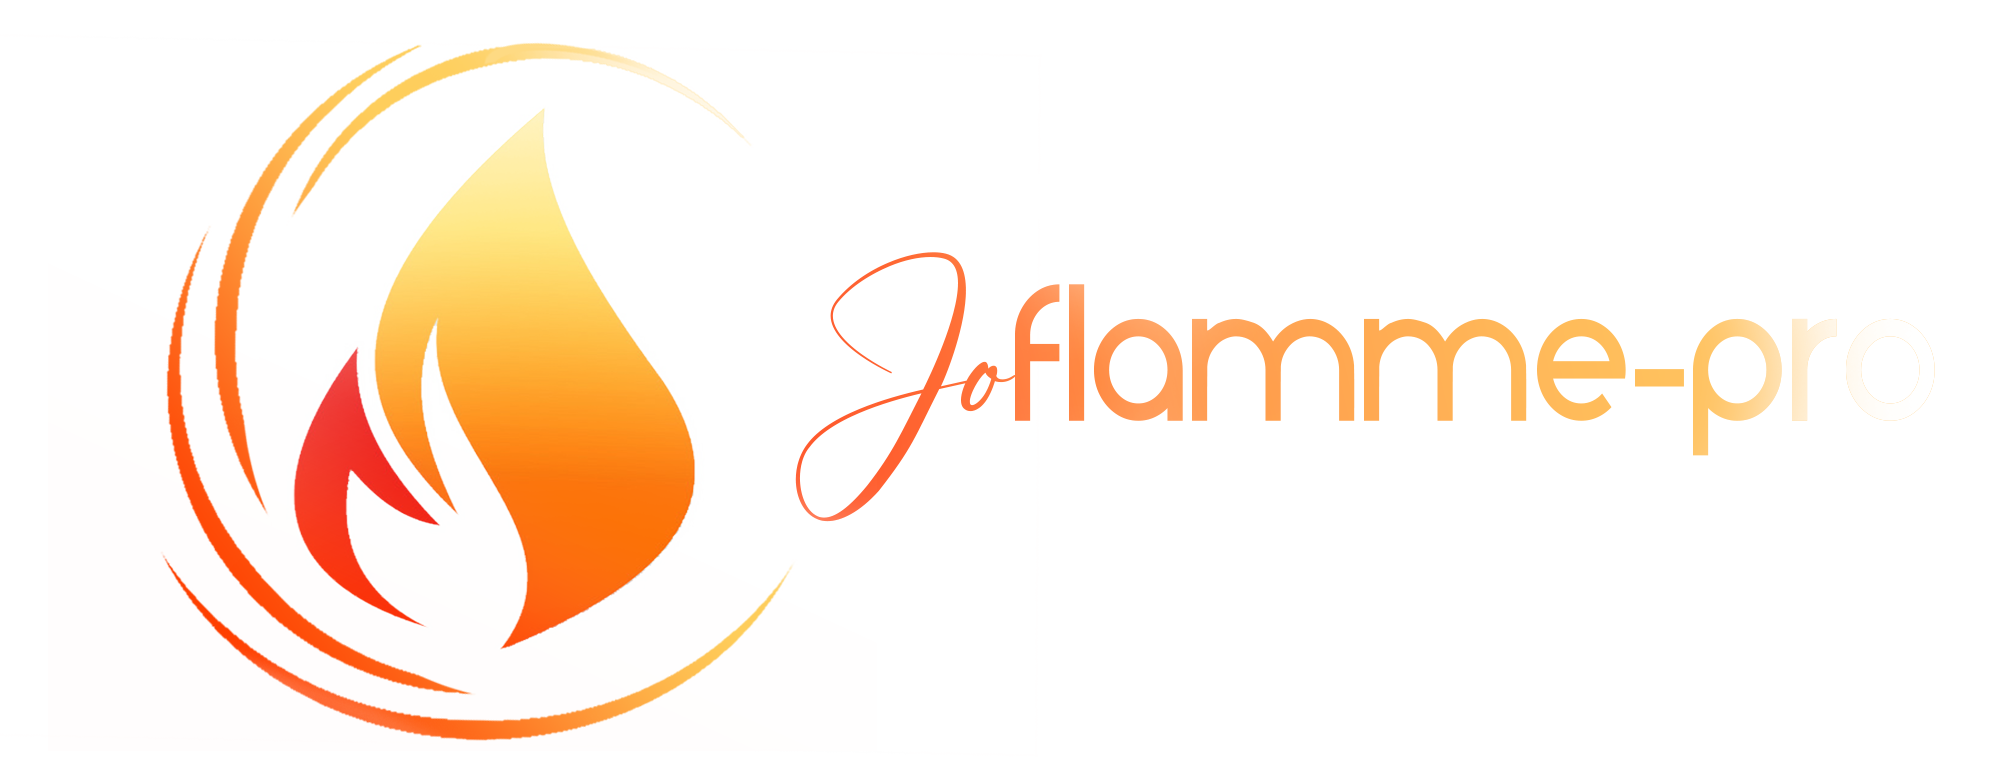 joflamme-pro logo